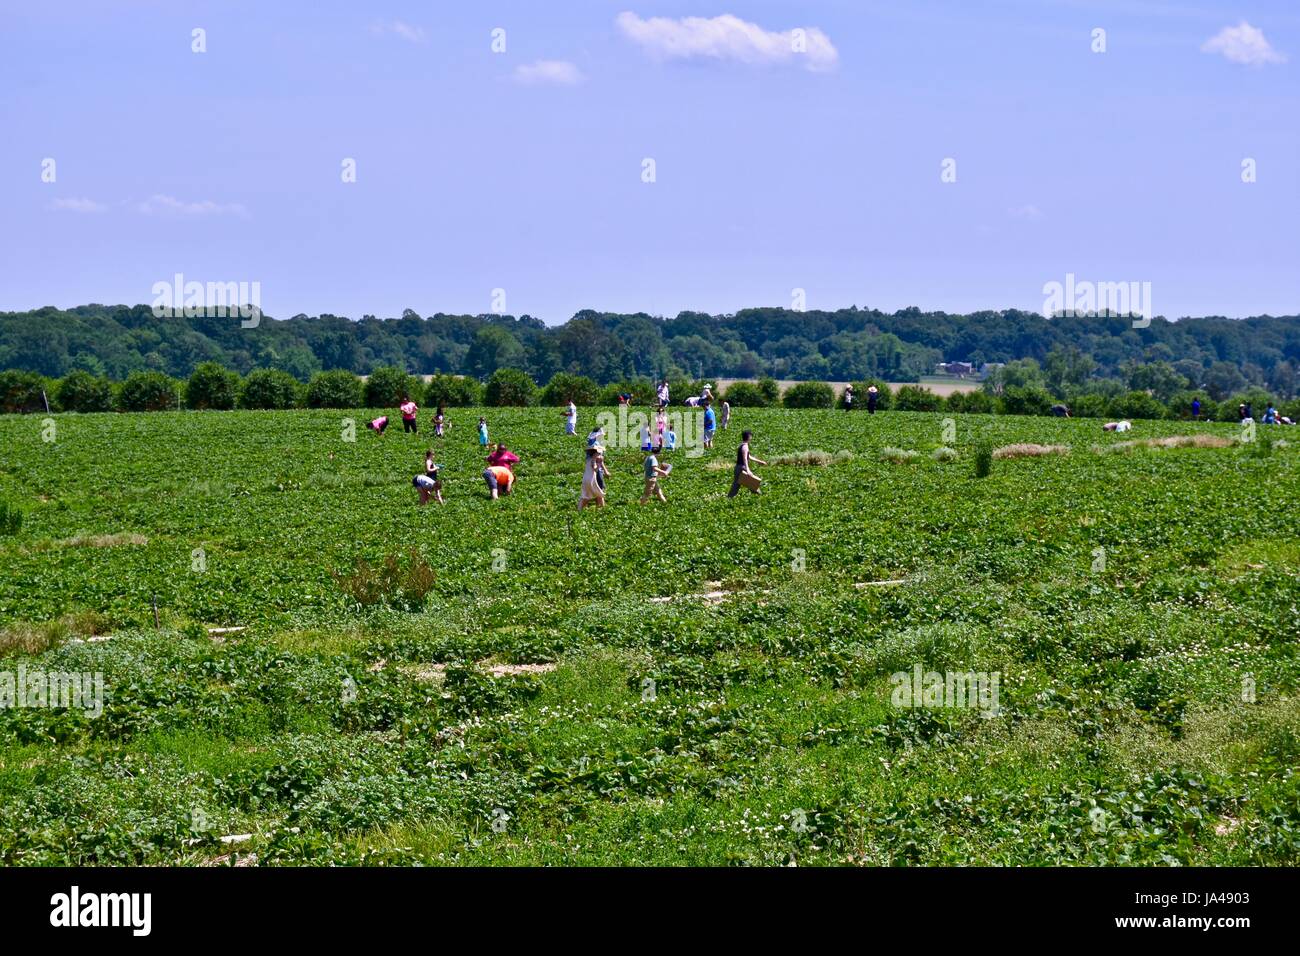 Picking strawberries on a U pick farm, self pick strawberry fields Stock Photo